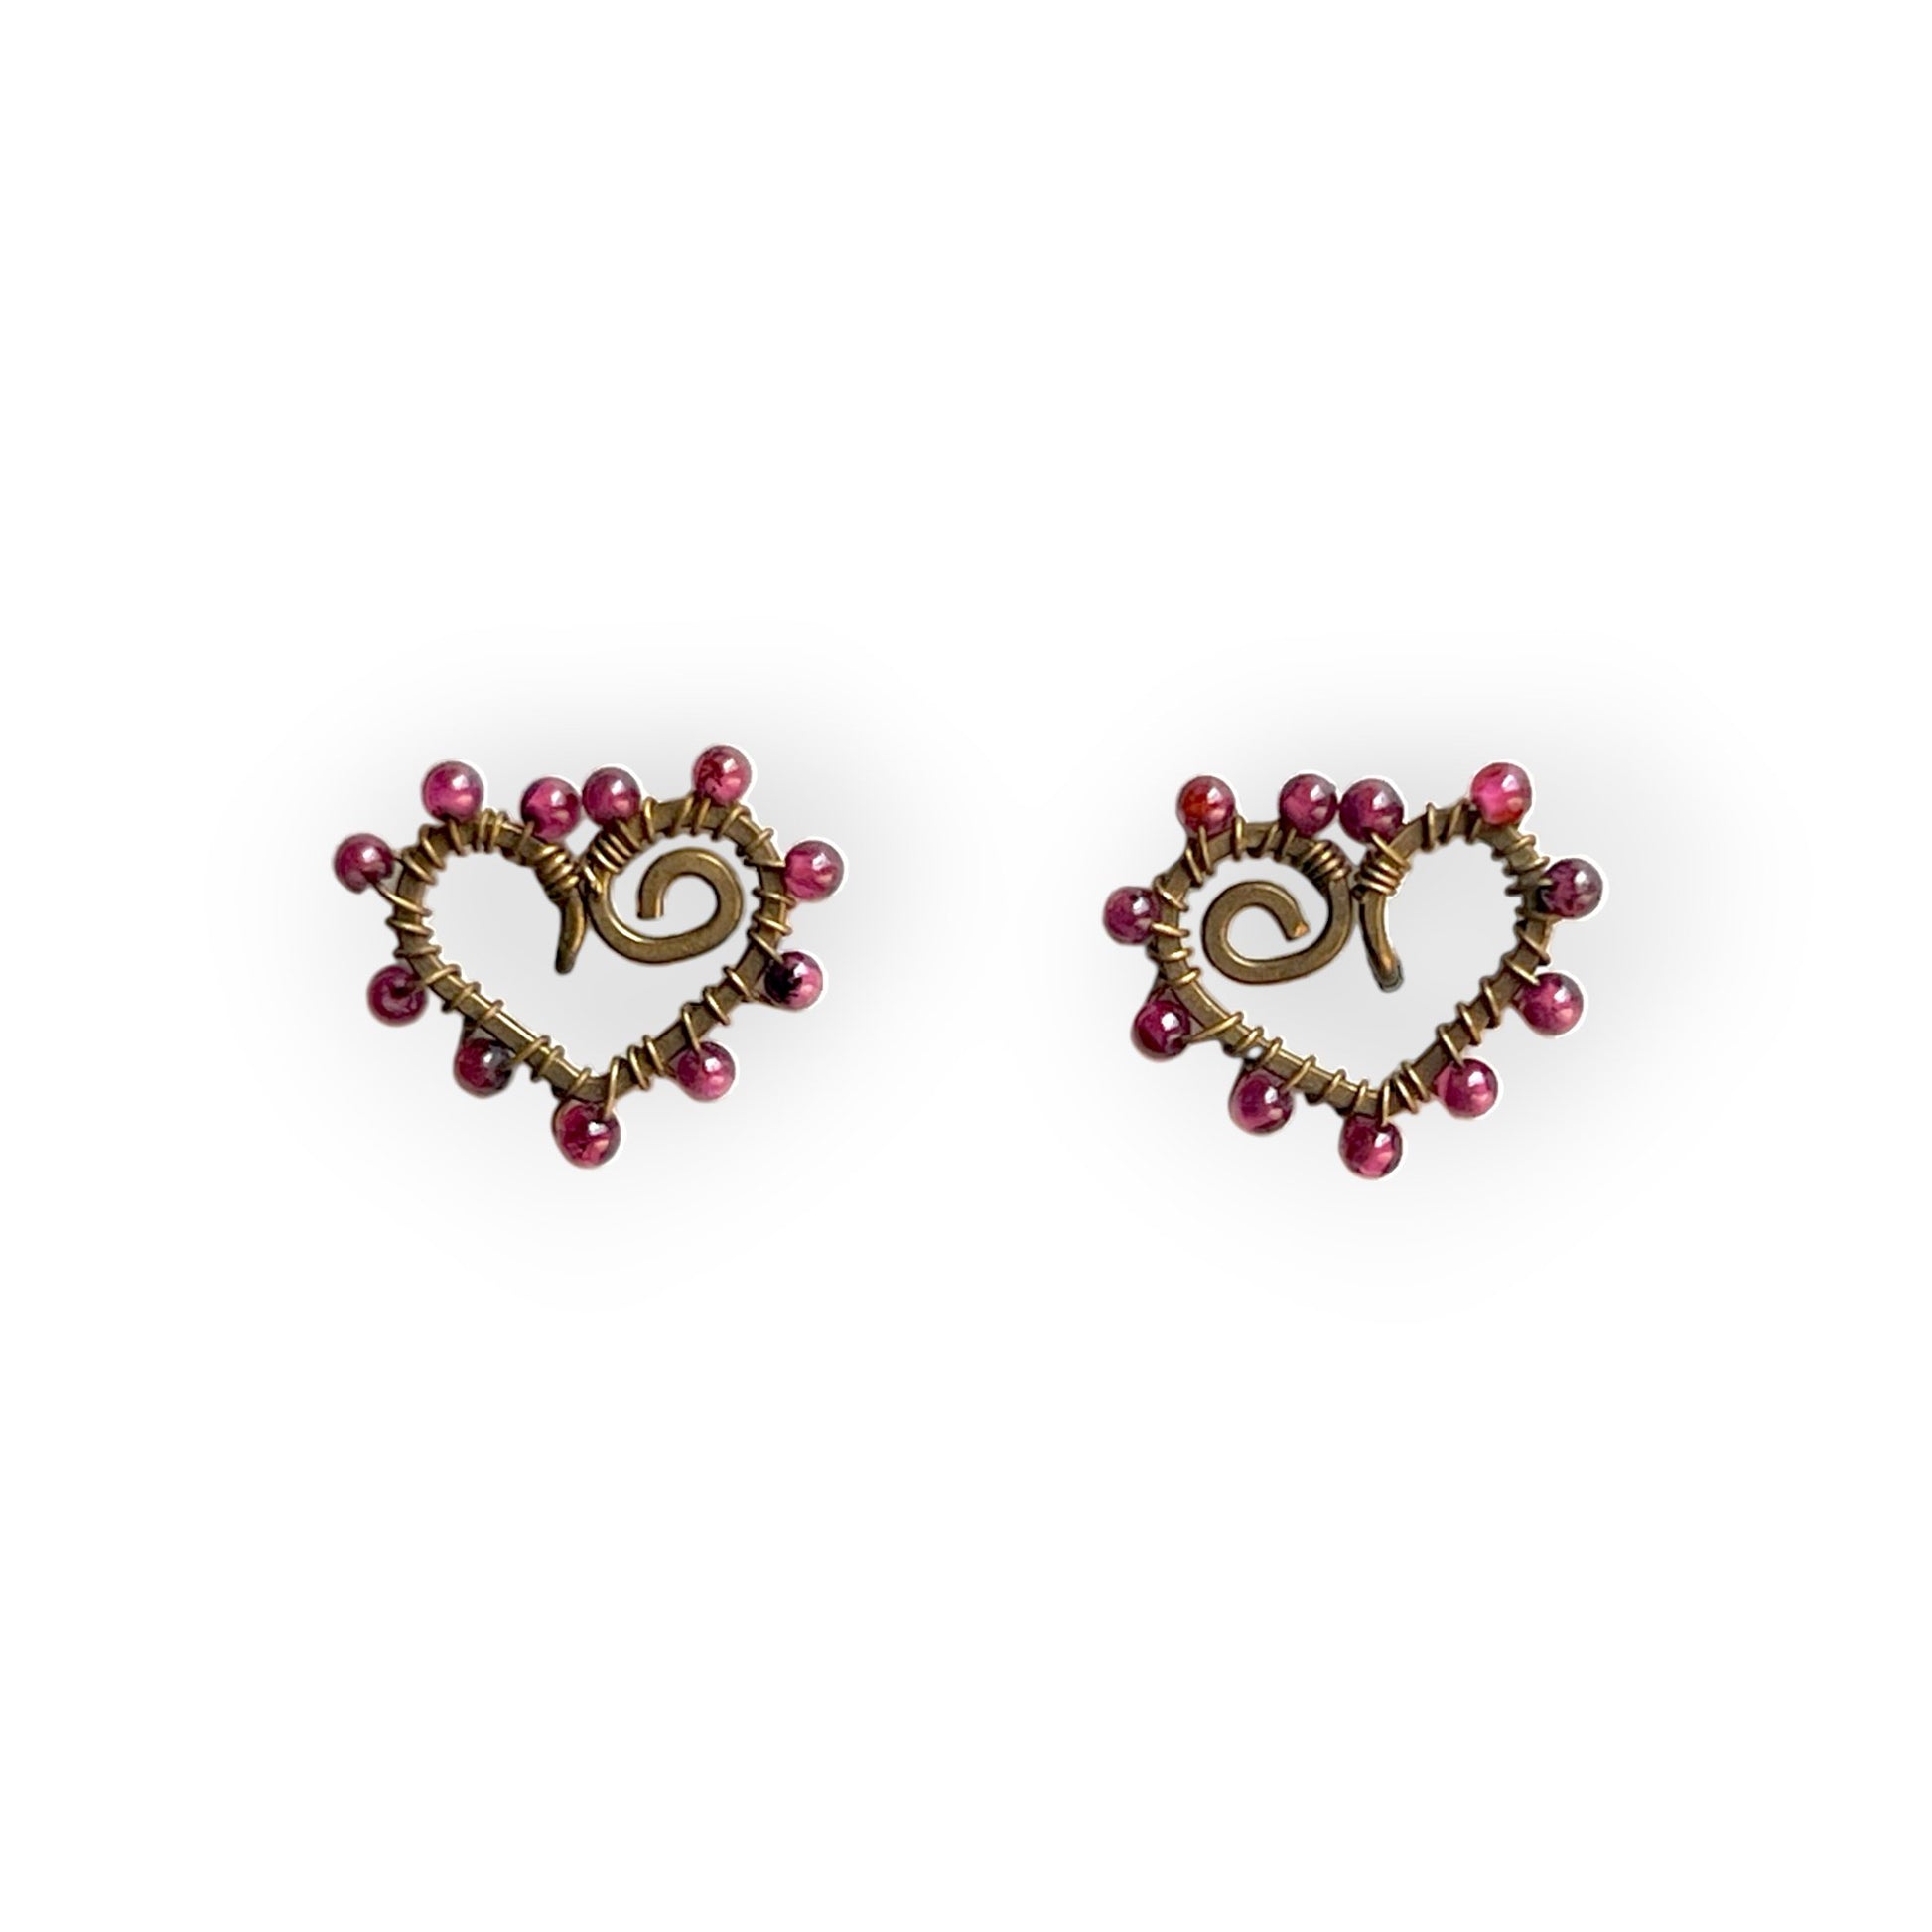 Small heart stud earrings with garnets - Sundara Joon